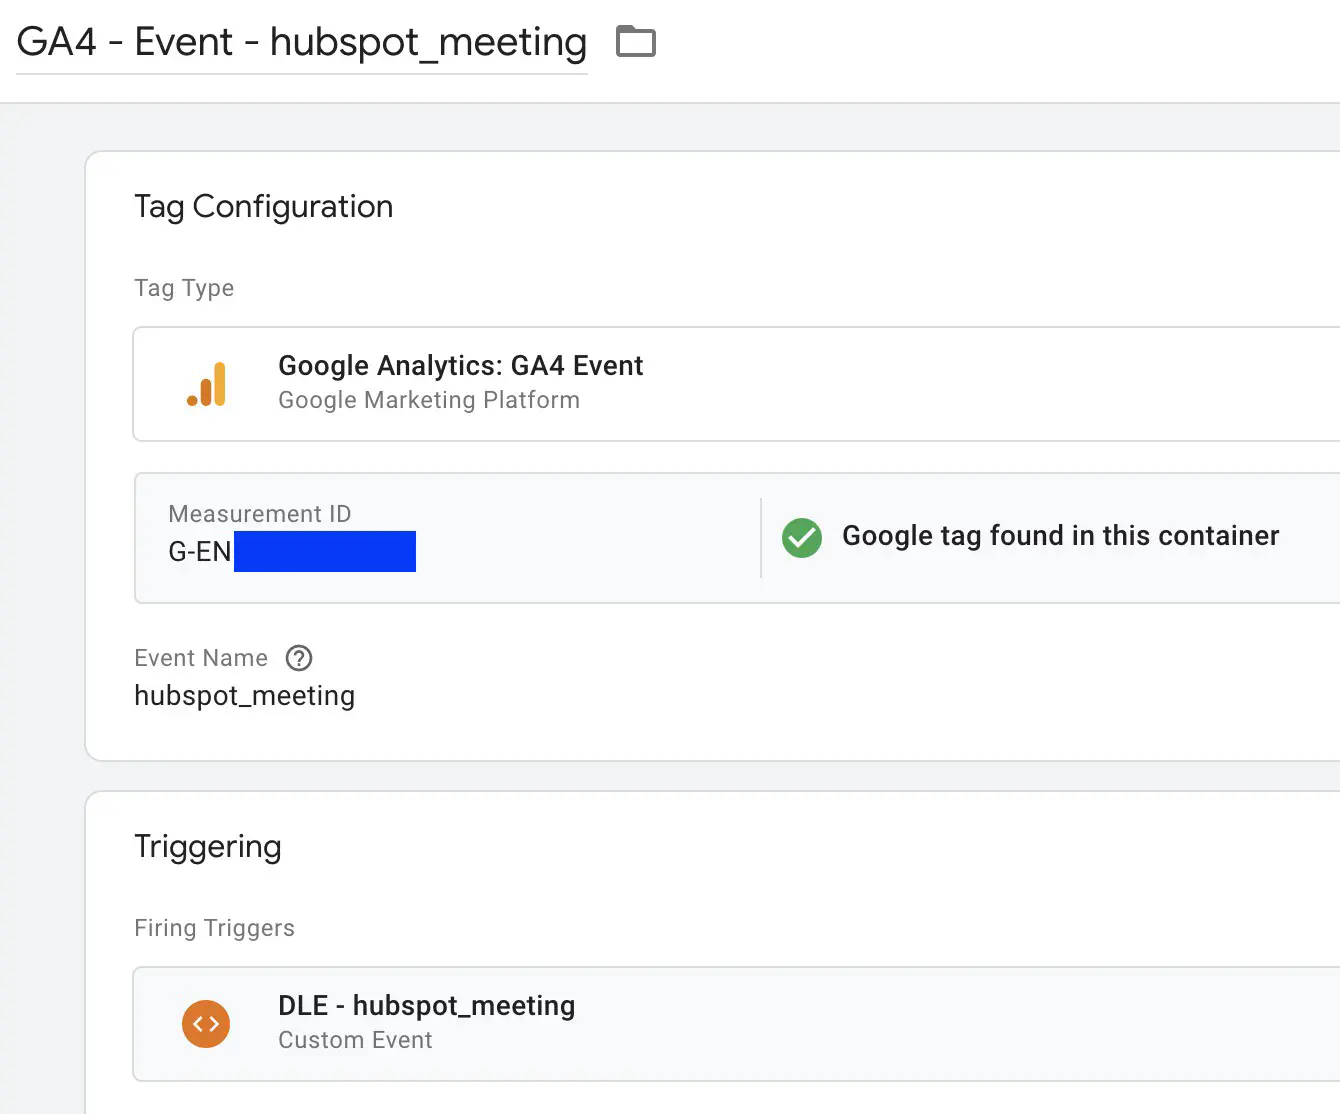 Hubspot meetings google analytics 4 event